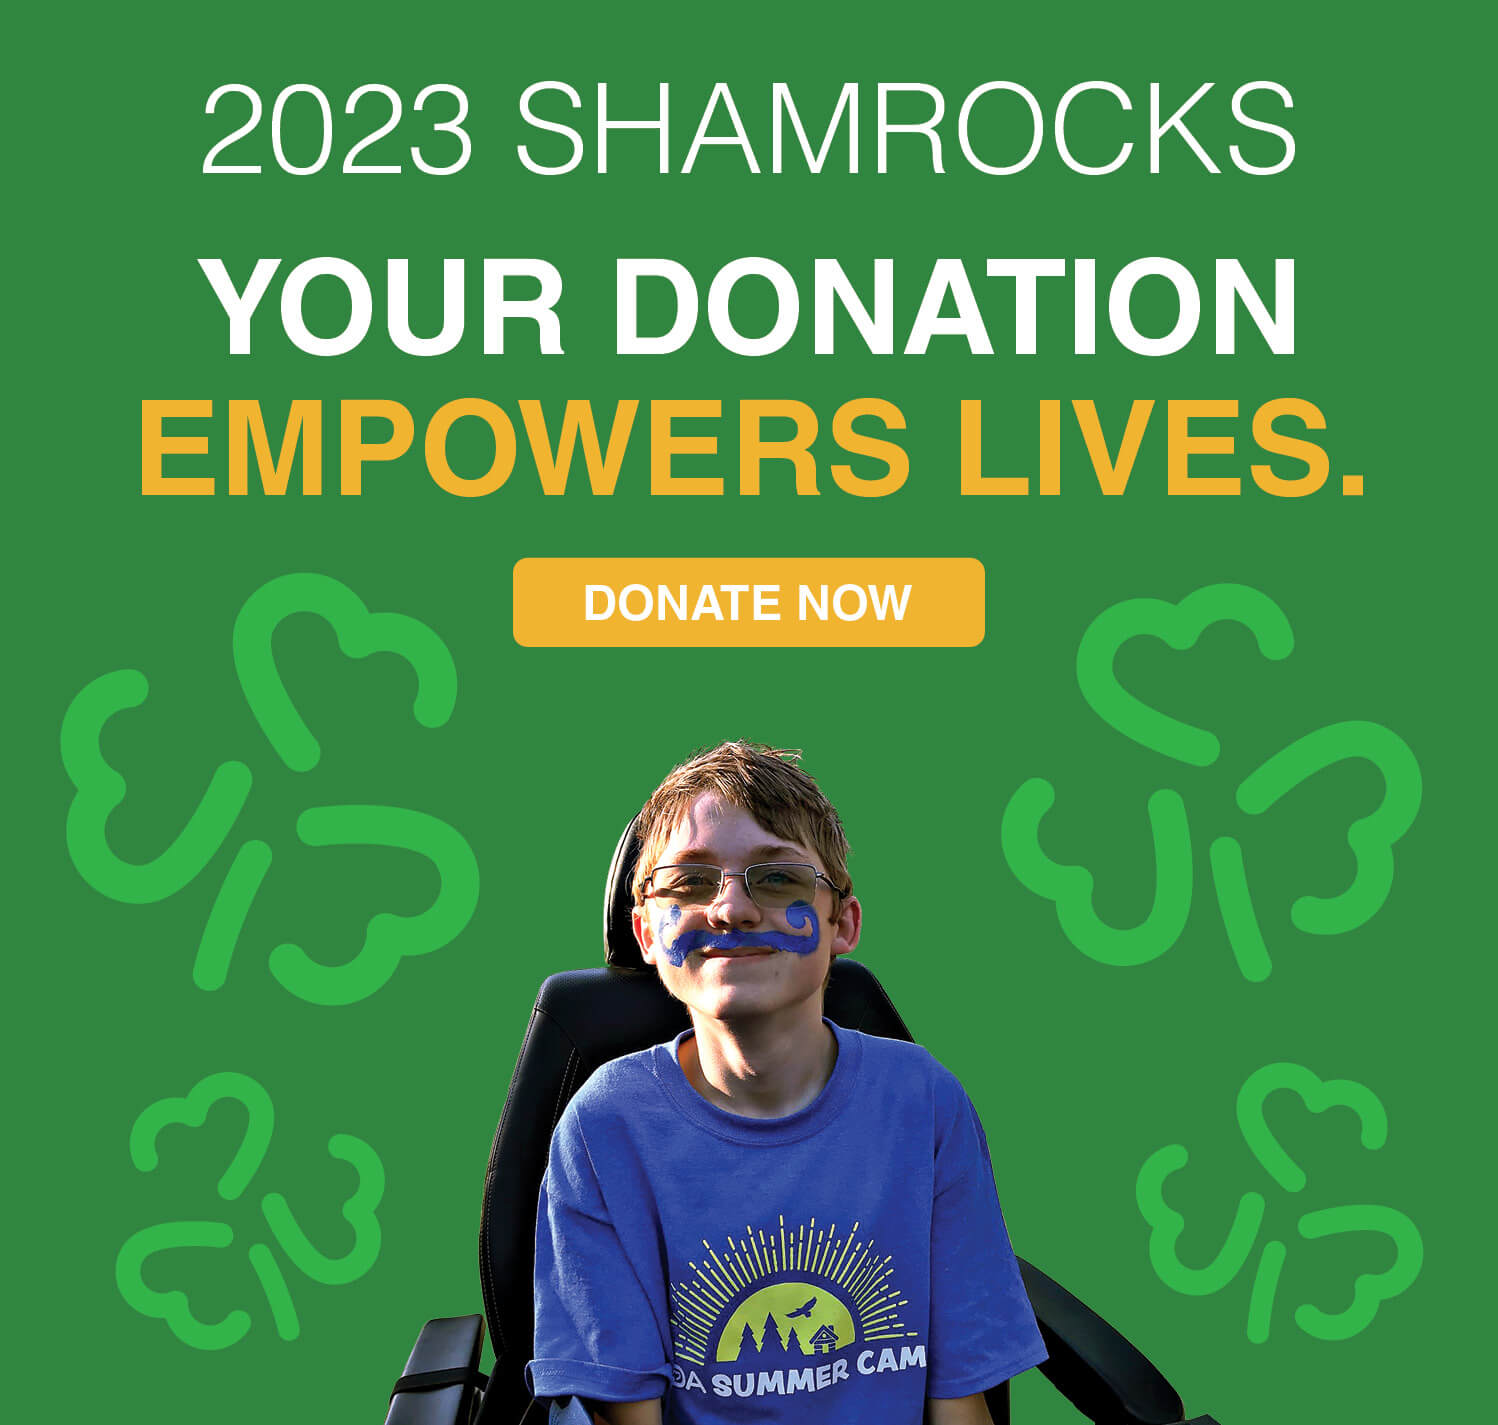 2023 Shamrocks. Your donation empowers lives.